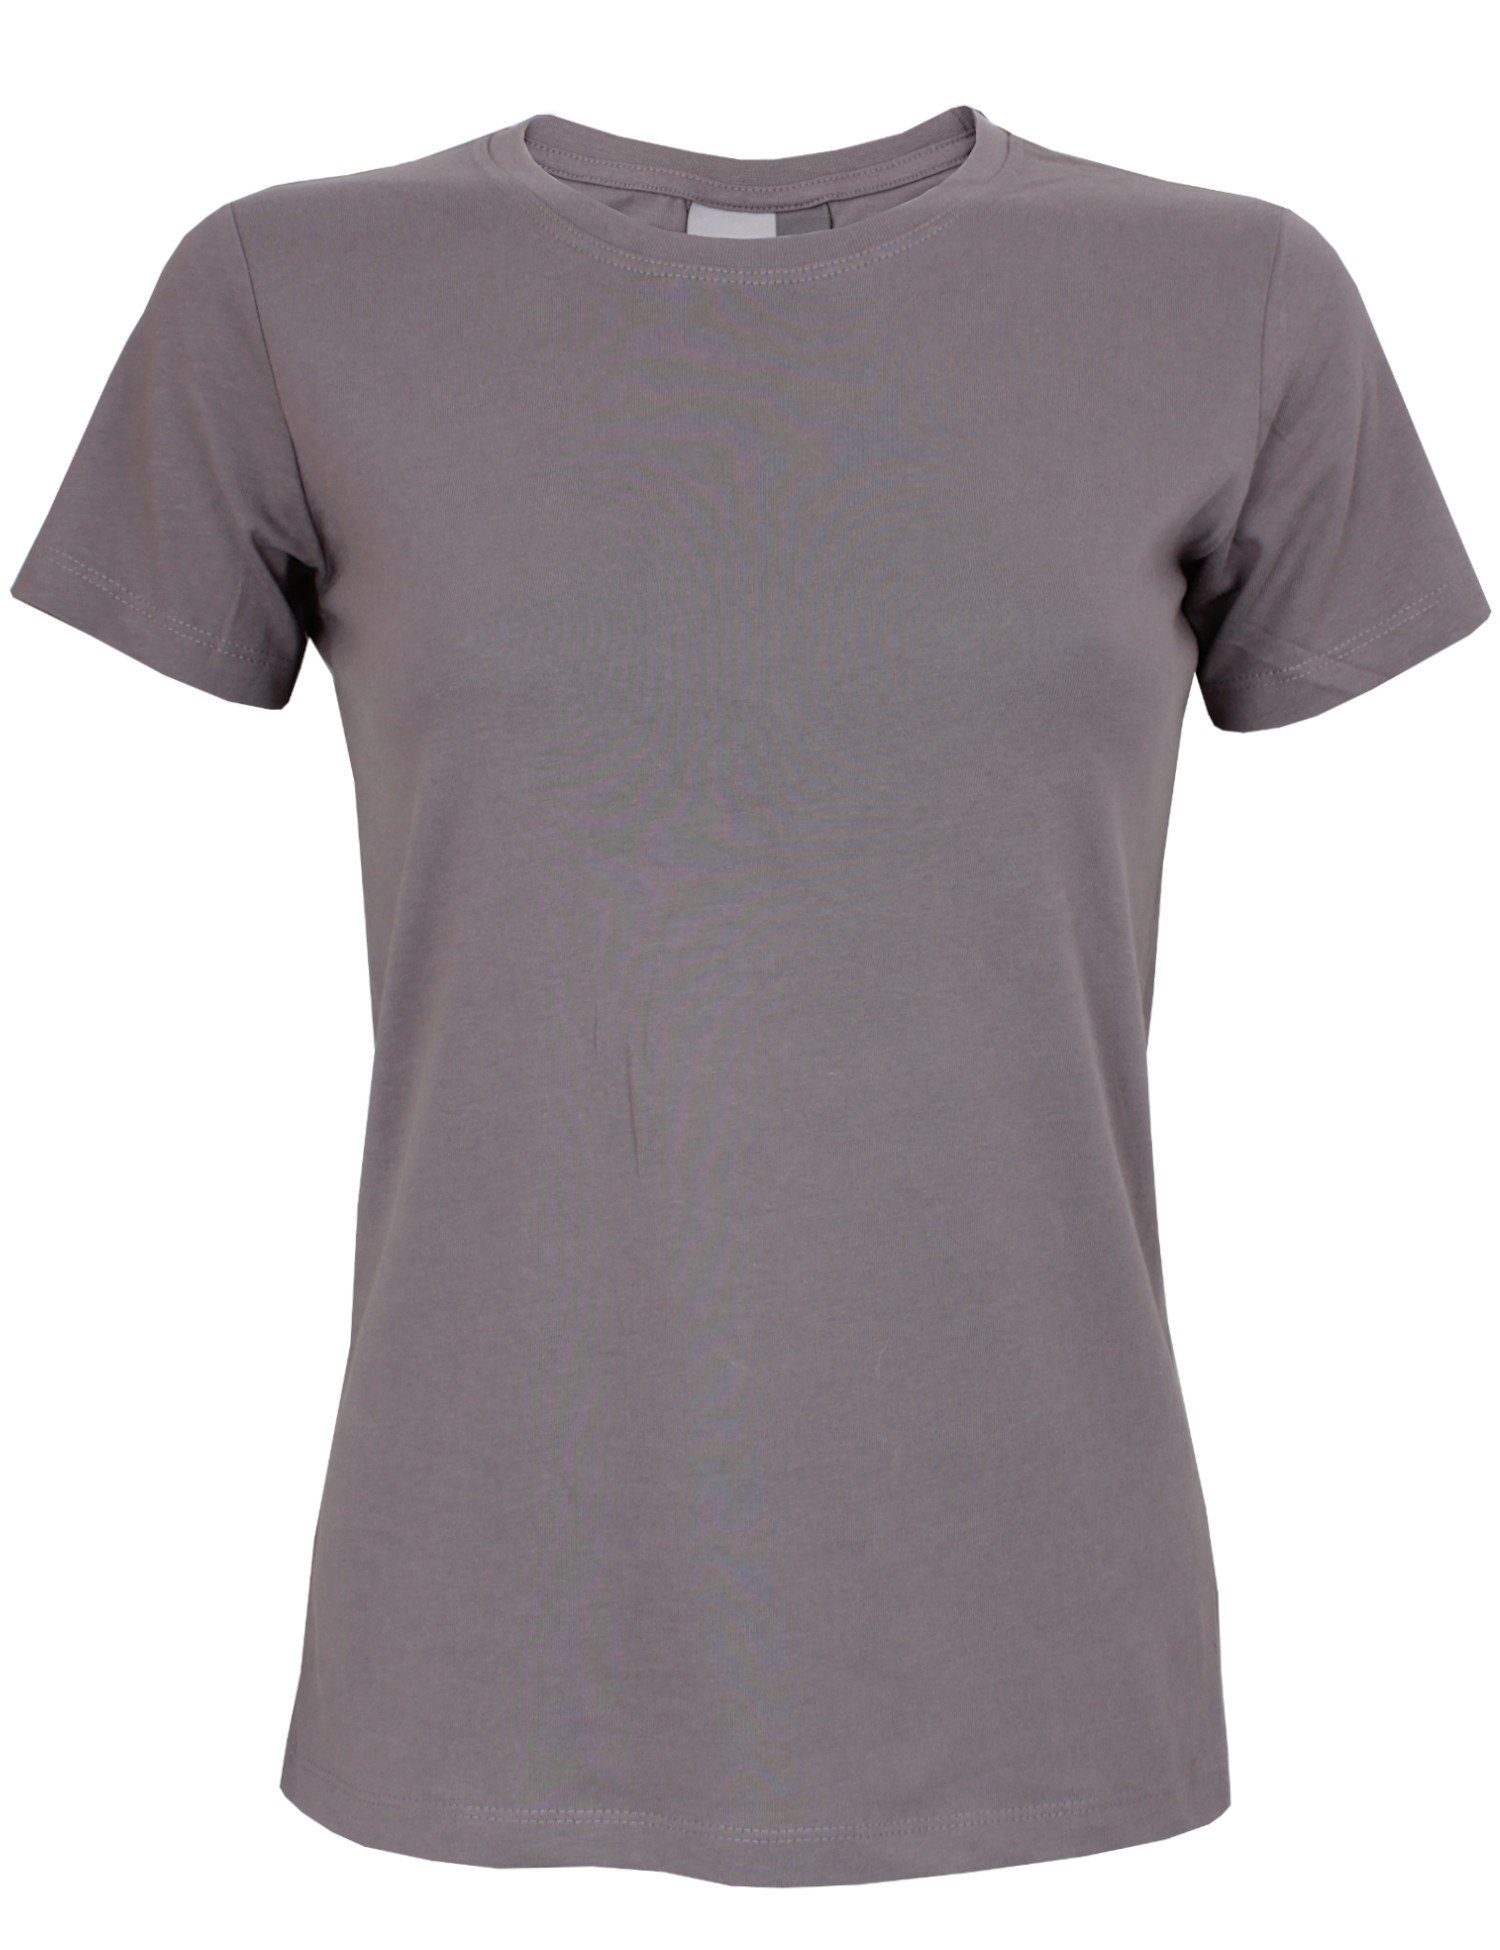 Promodoro Rundhalsshirt Women’s Premium-Shirt Unifarben light grey | T-Shirts